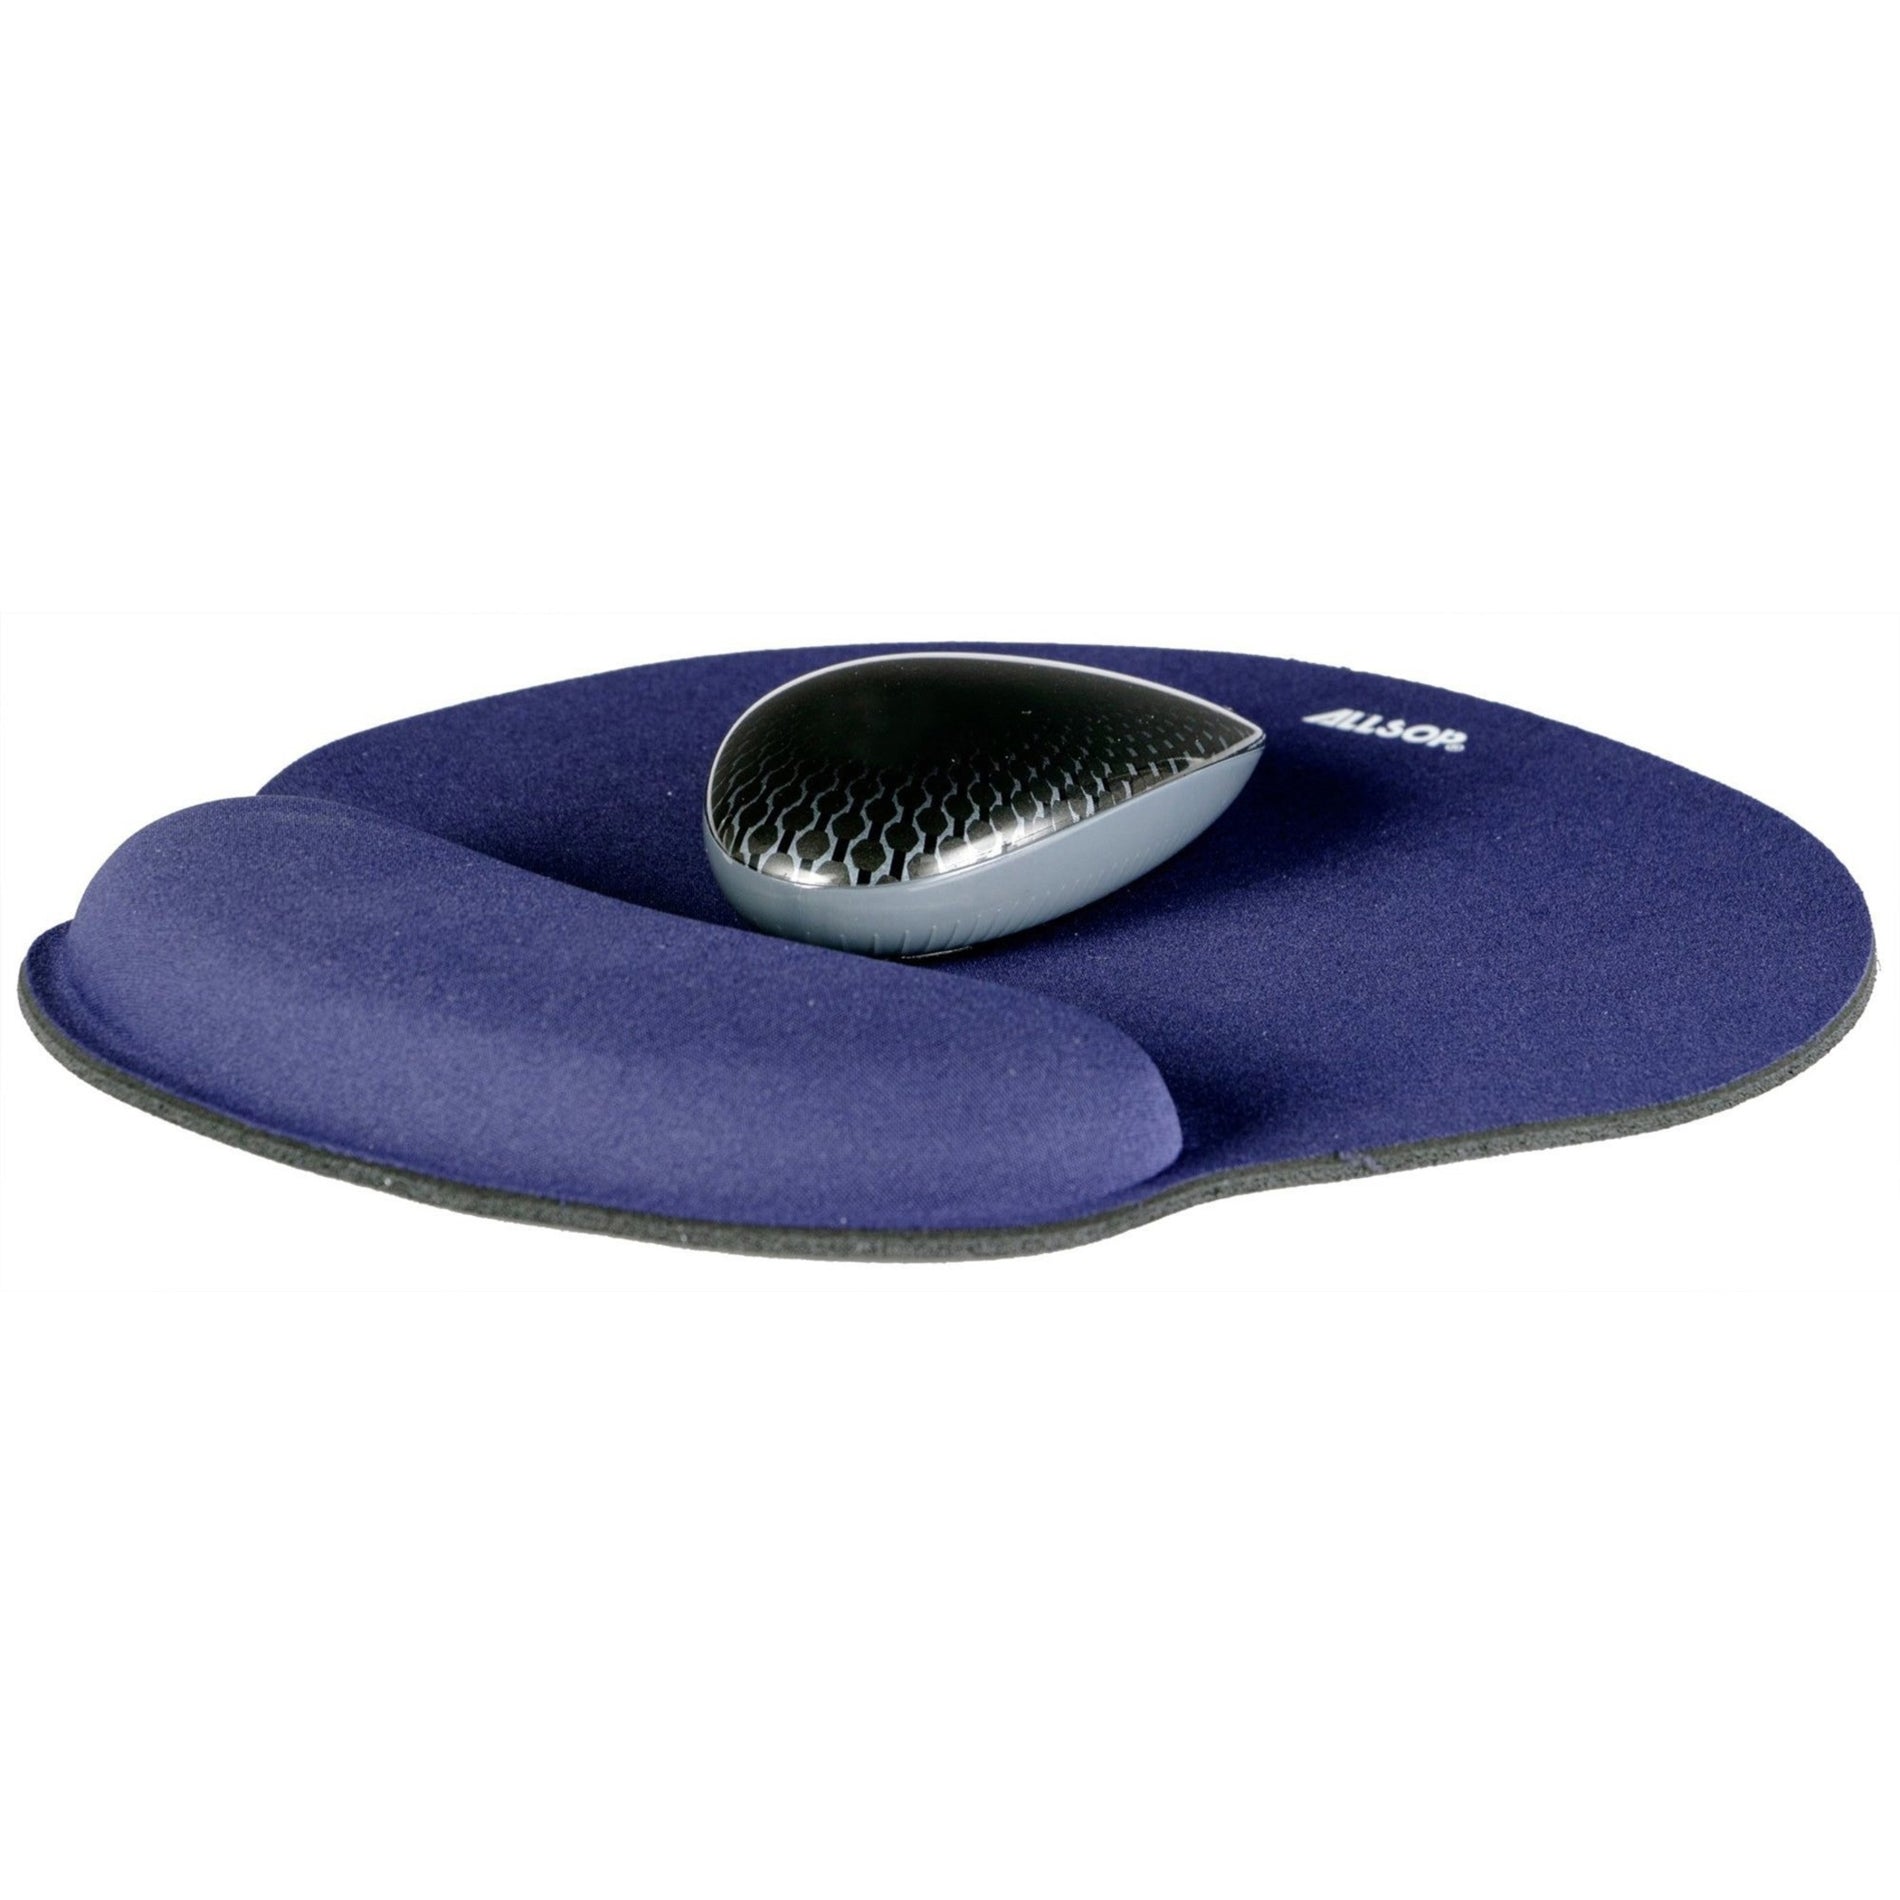 Allsop 30206 ComfortFoam Memory Foam Mouse Pad with Wrist Rest, Non-Skid, Blue